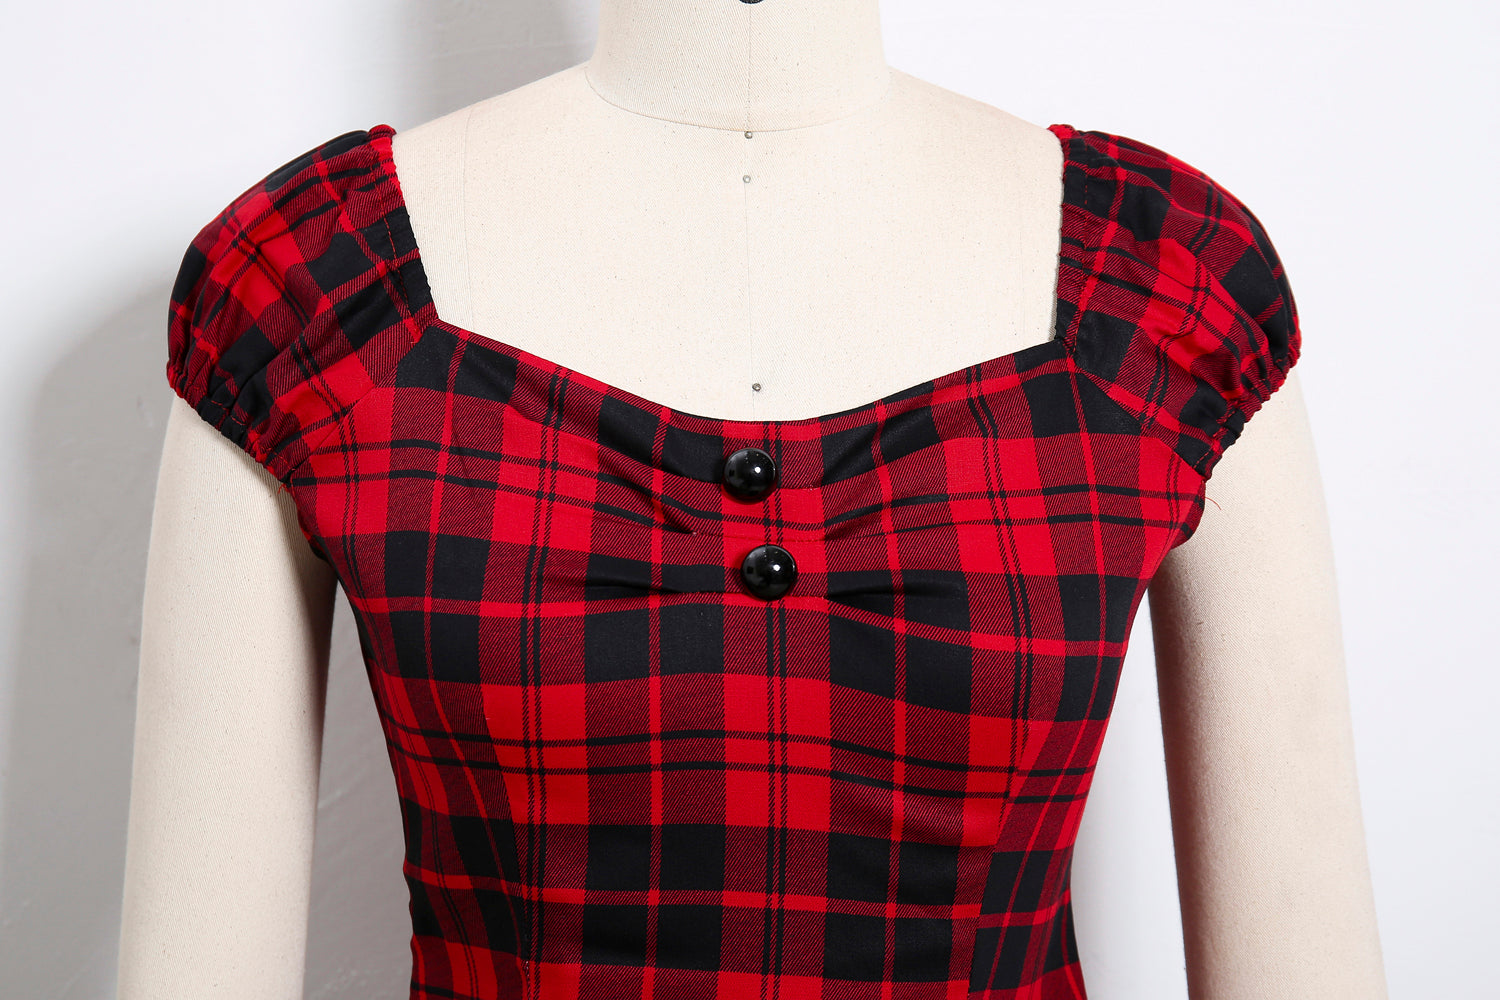 Women's Vintage 1950s Party Top Polka plaid Rockabilly 40s cap sleeve Cotton Shirts Tops(S-2XL) Sai Feel